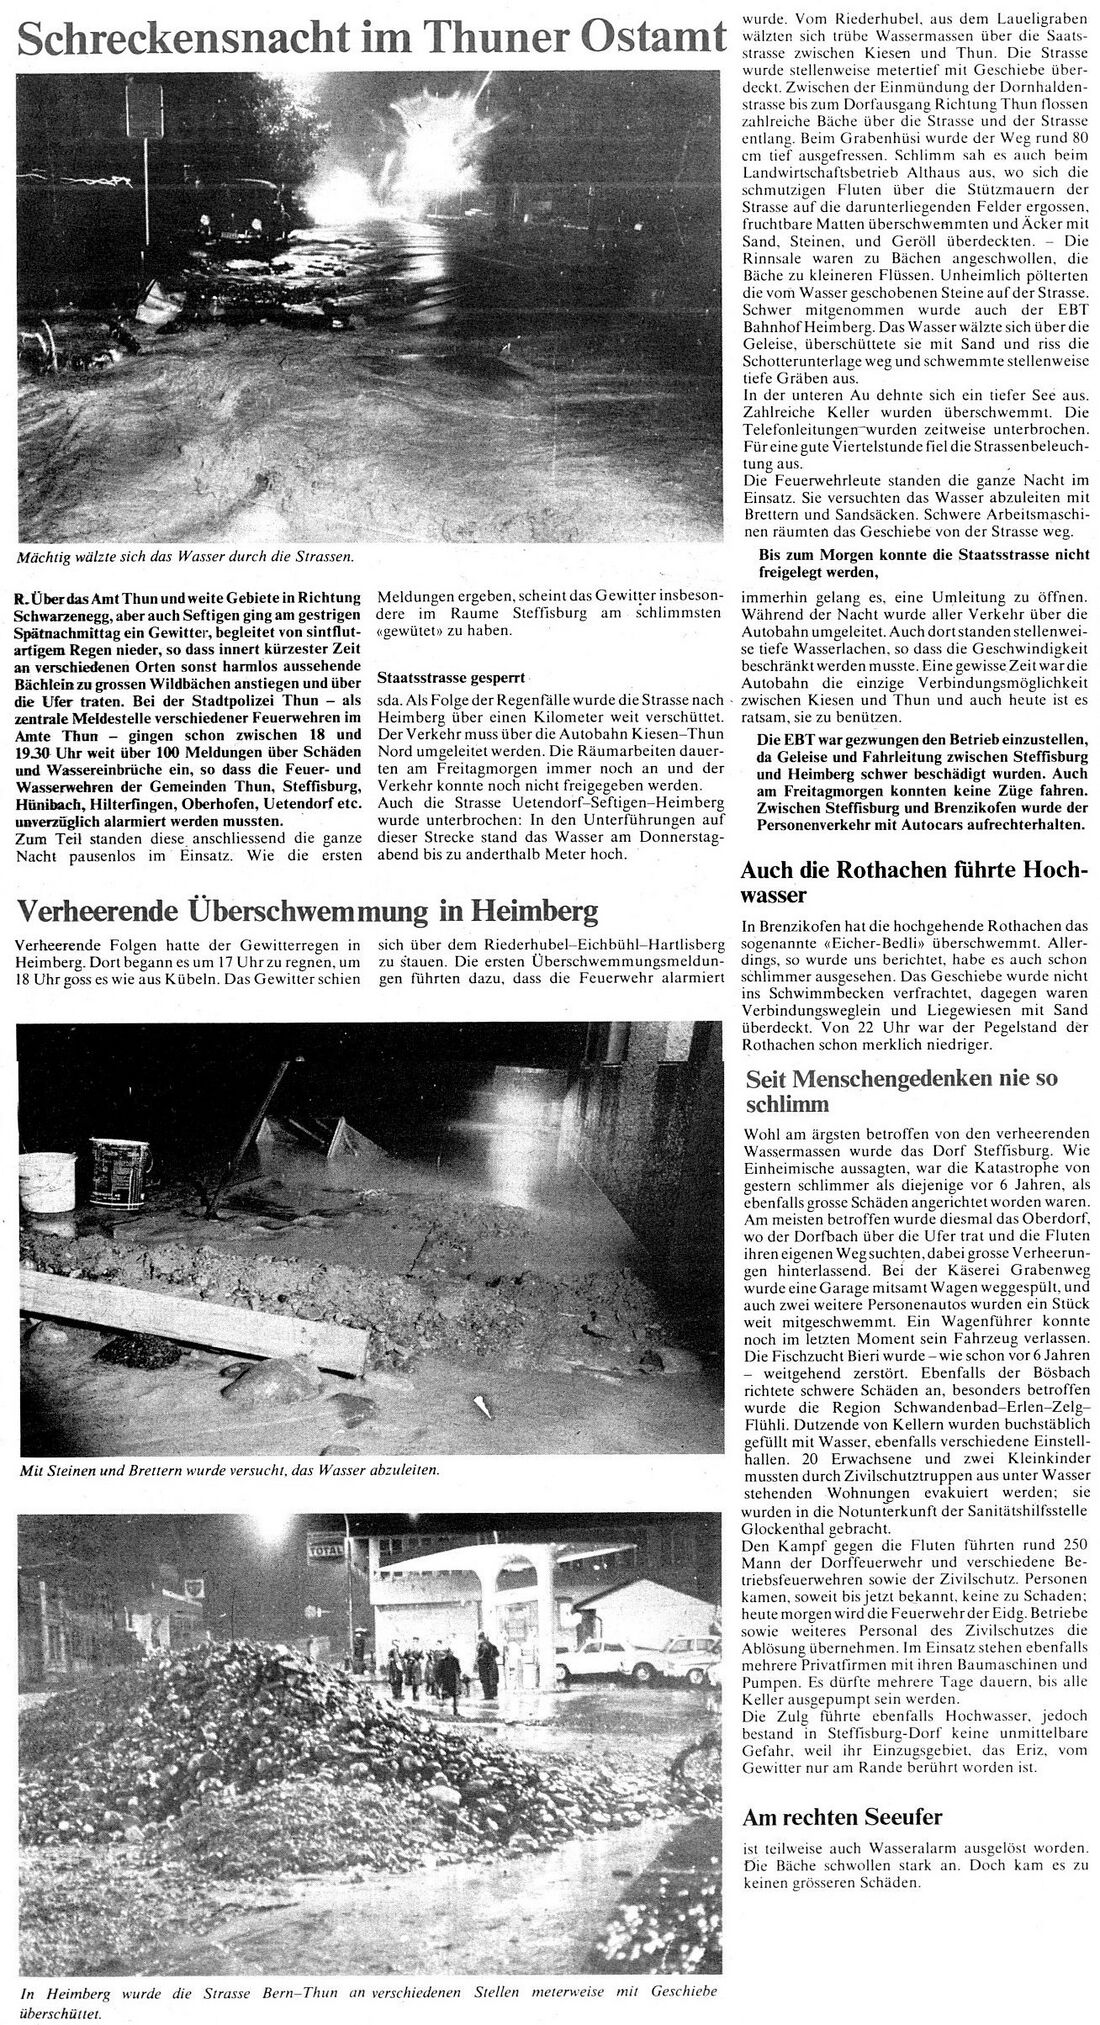 19740822 01 Flood Steffisburg BE Text1 Thuner 23.08.74.jpg